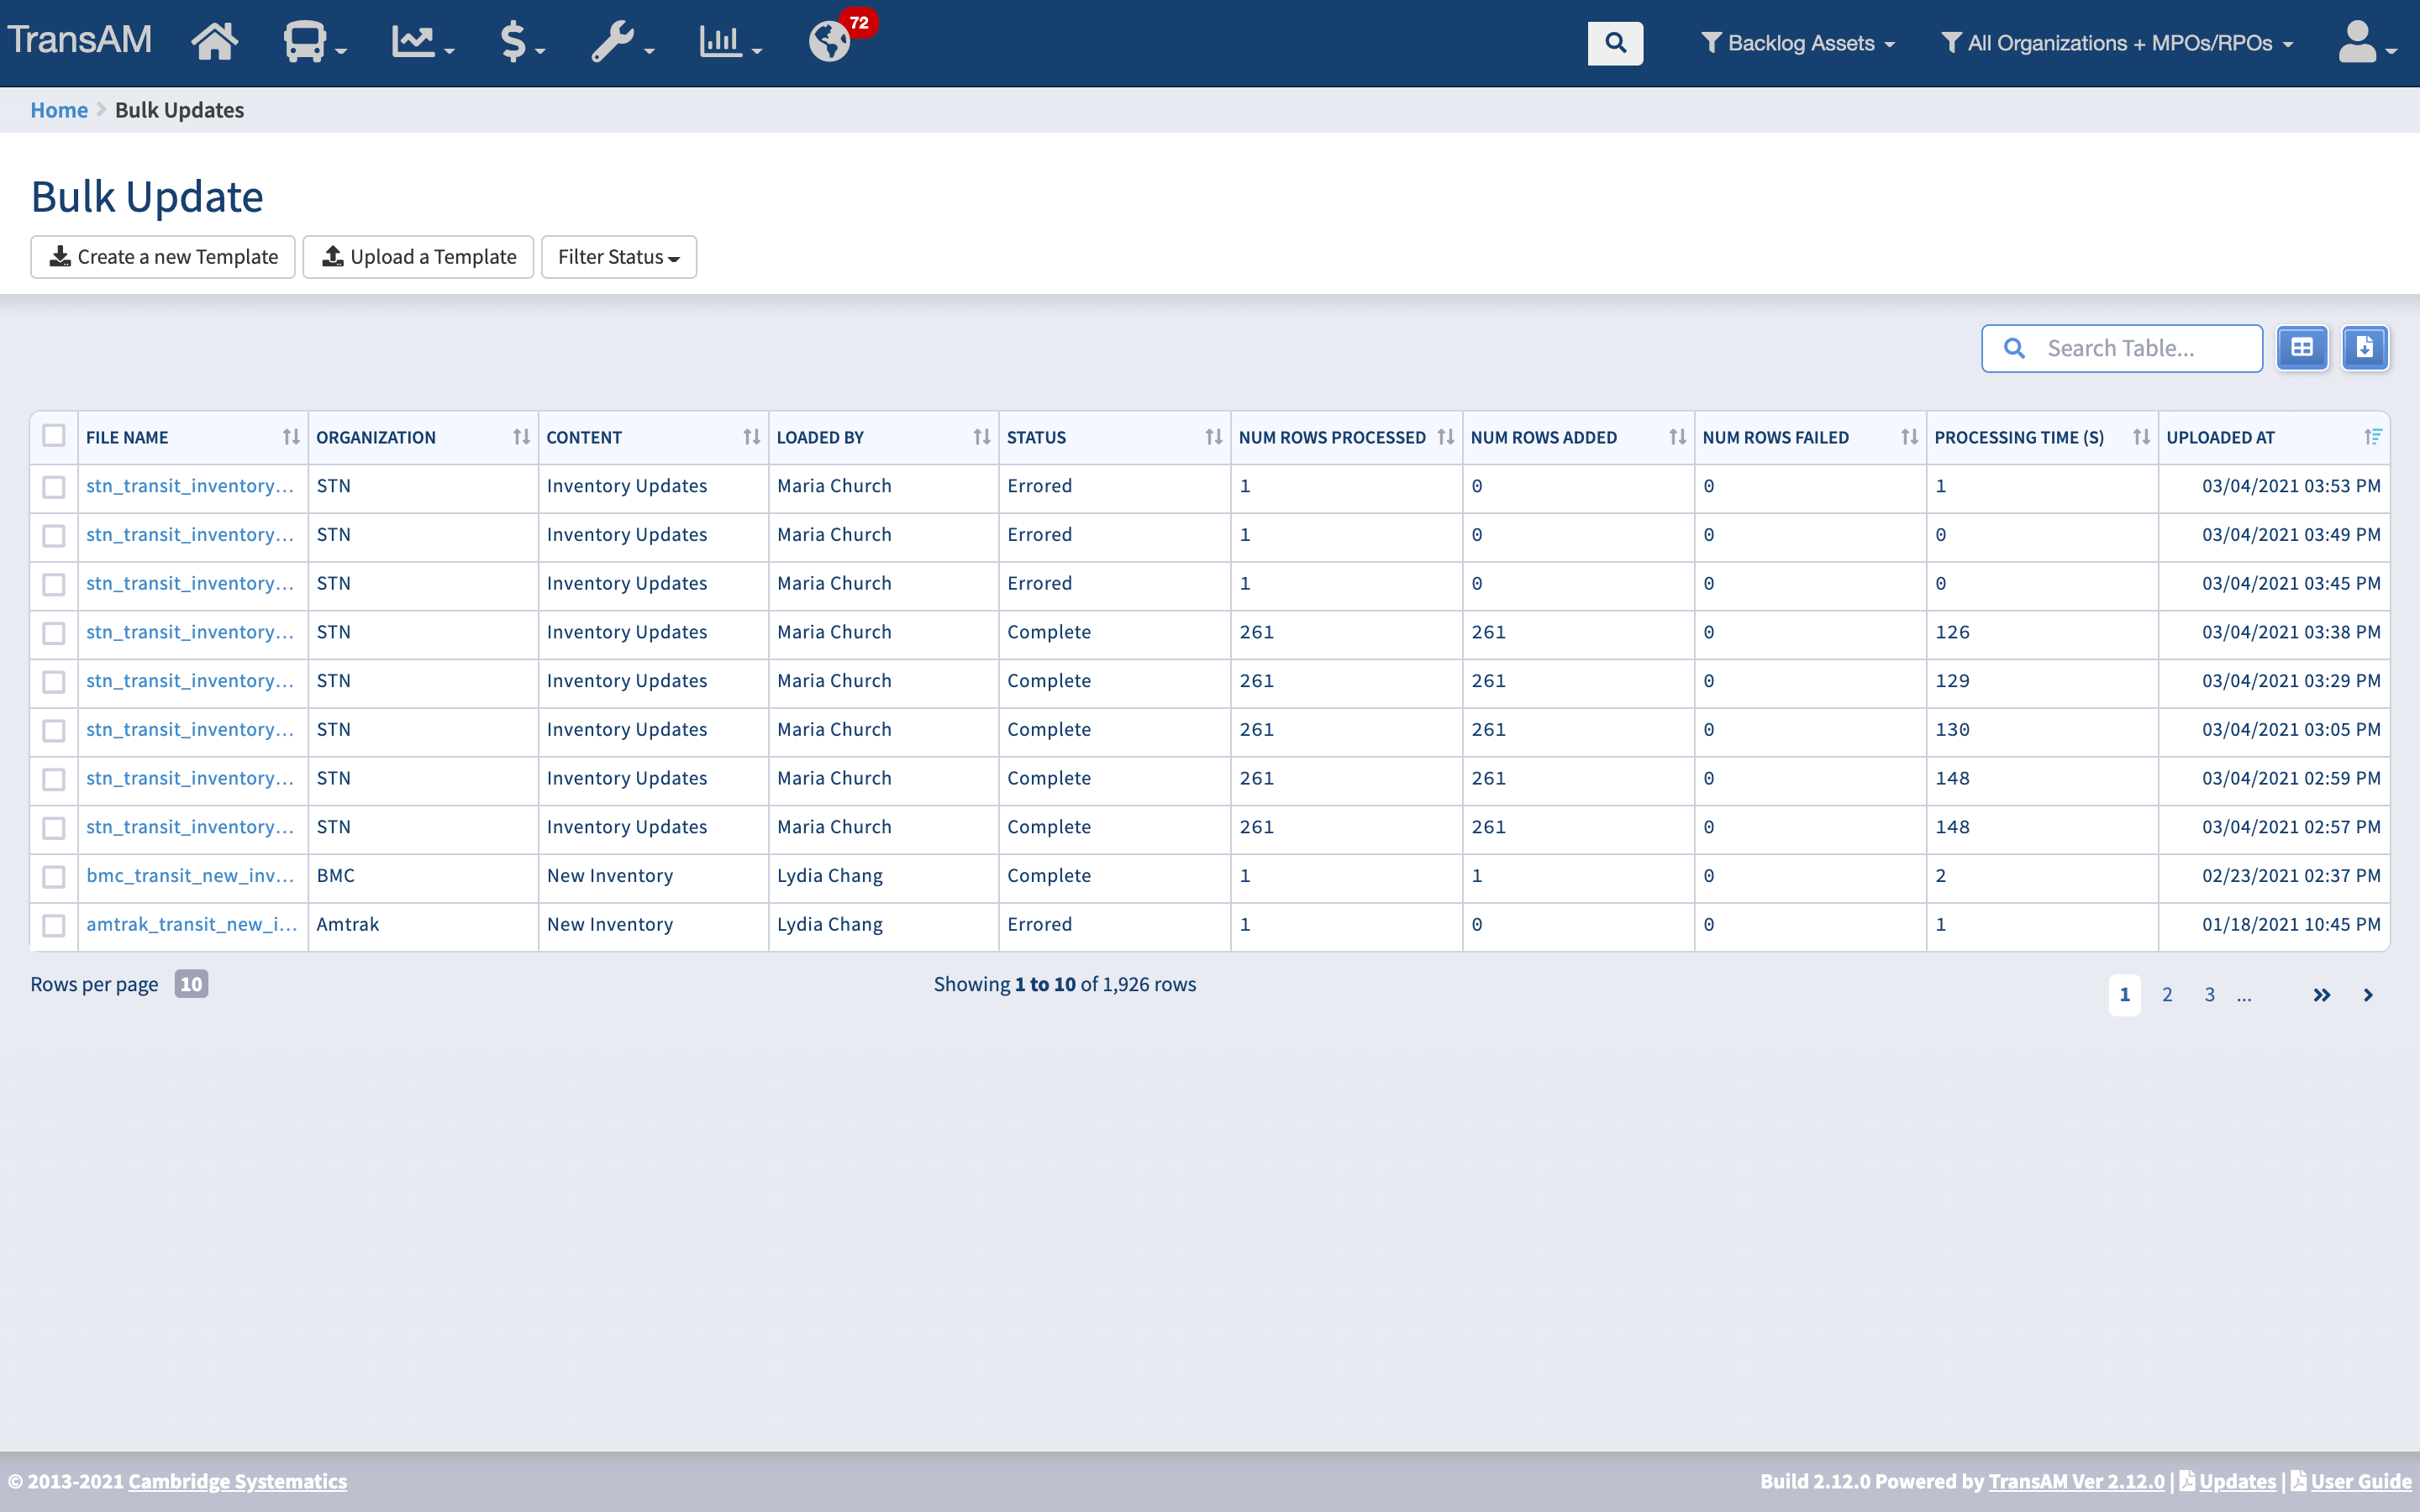 A screenshot of the TransAM platform, showing the Bulk Updates page.